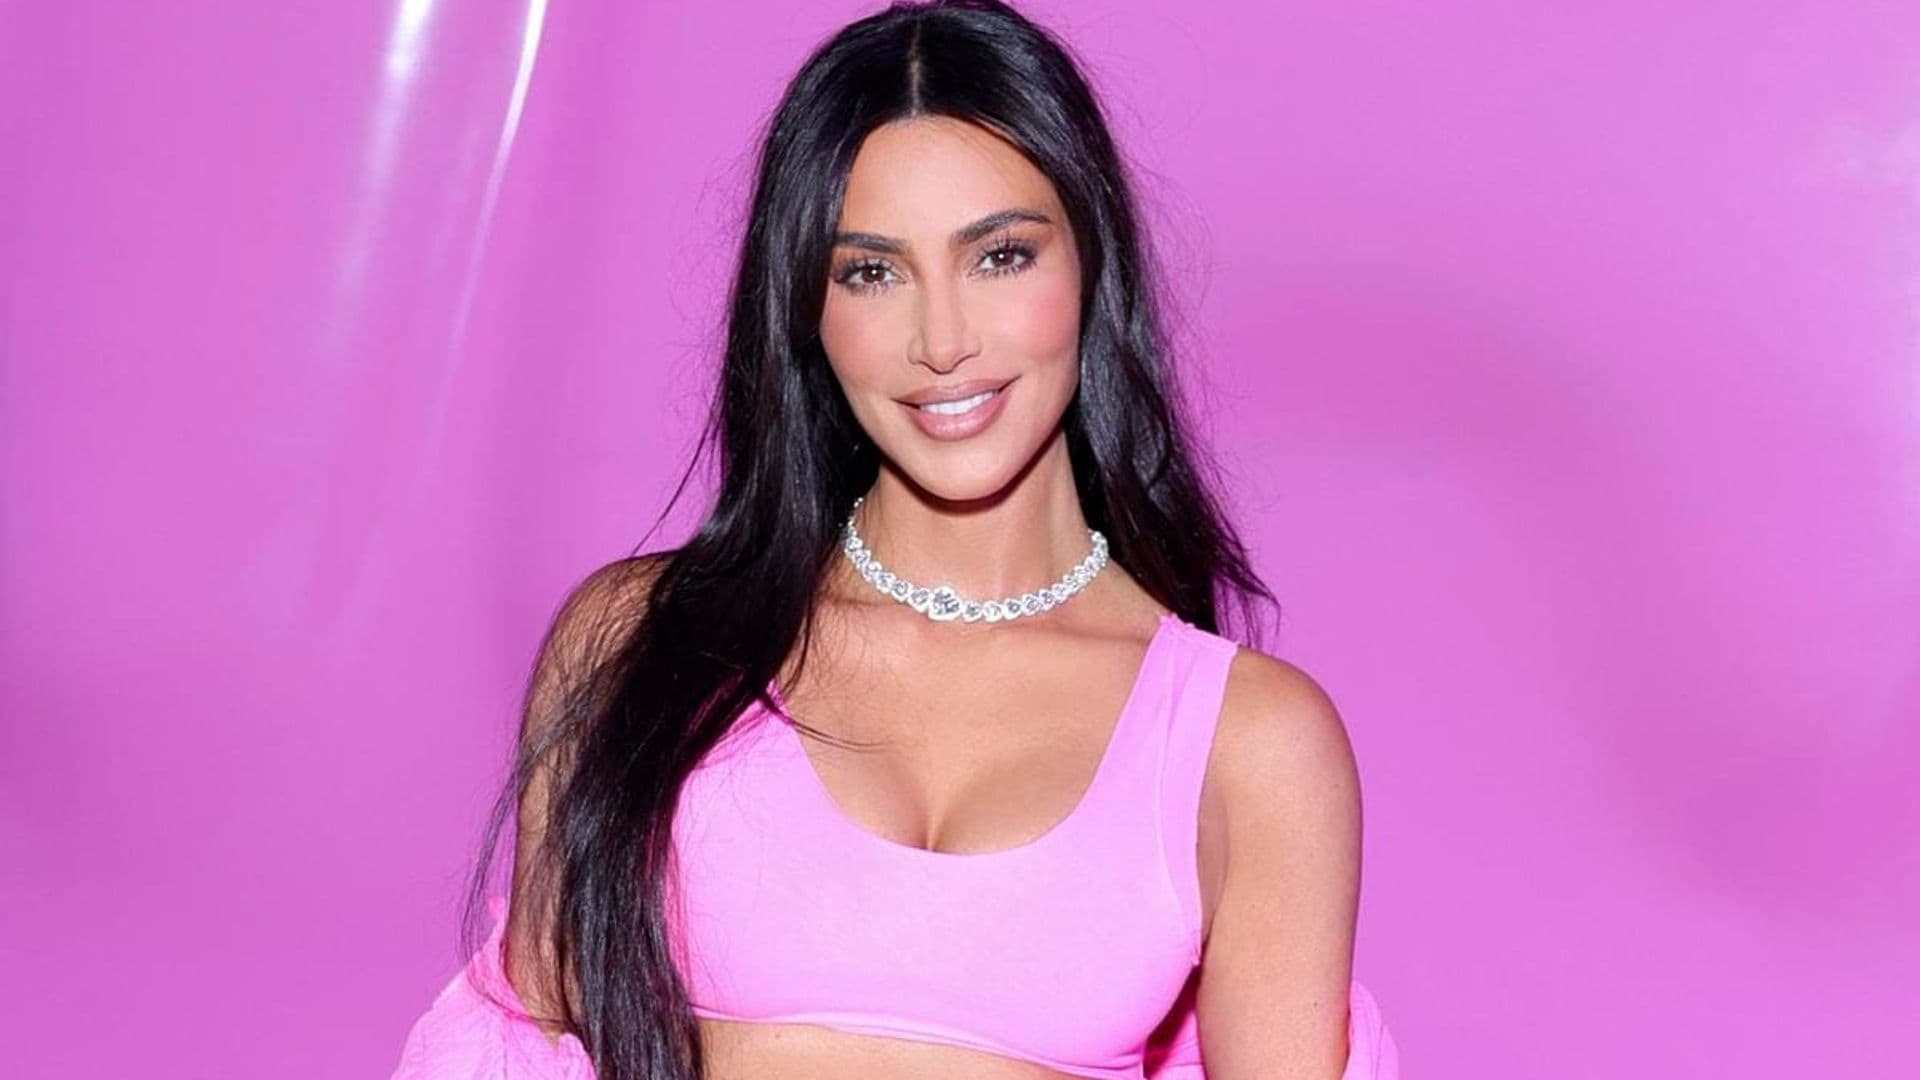 Kim Kardashian’s alien-themed photoshoot has fans looking for hidden messages